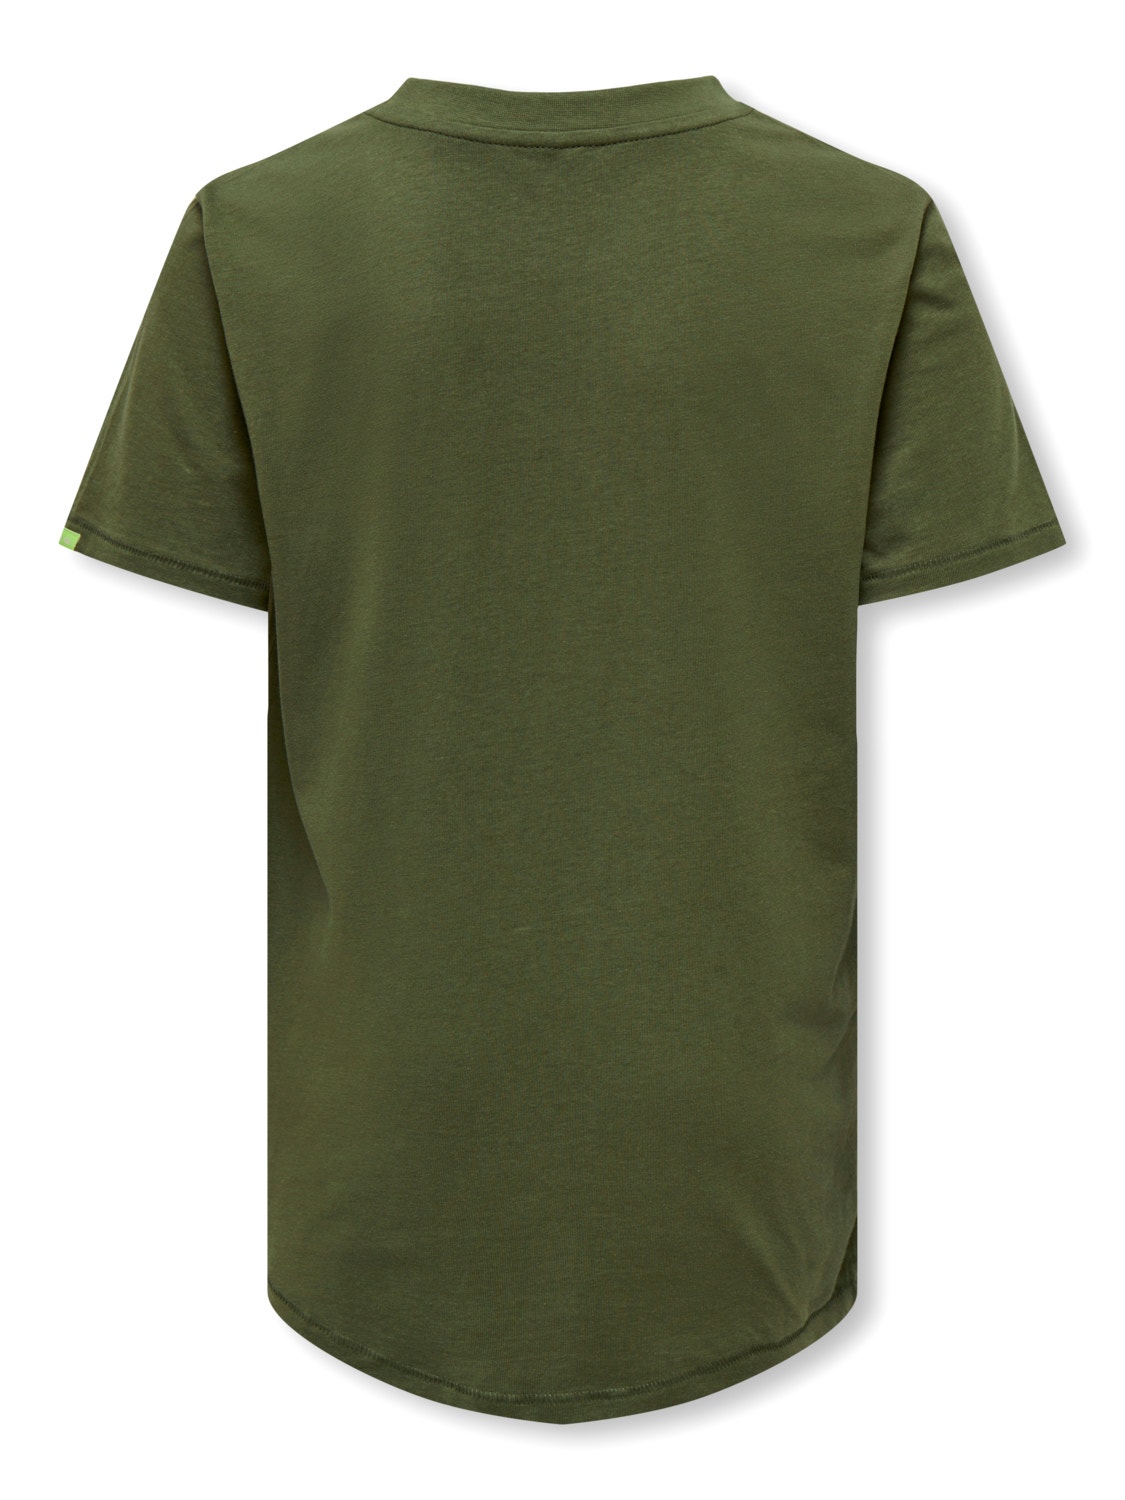 ONLY Camisetas Corte regular Cuello redondo -Winter Moss - 15303789